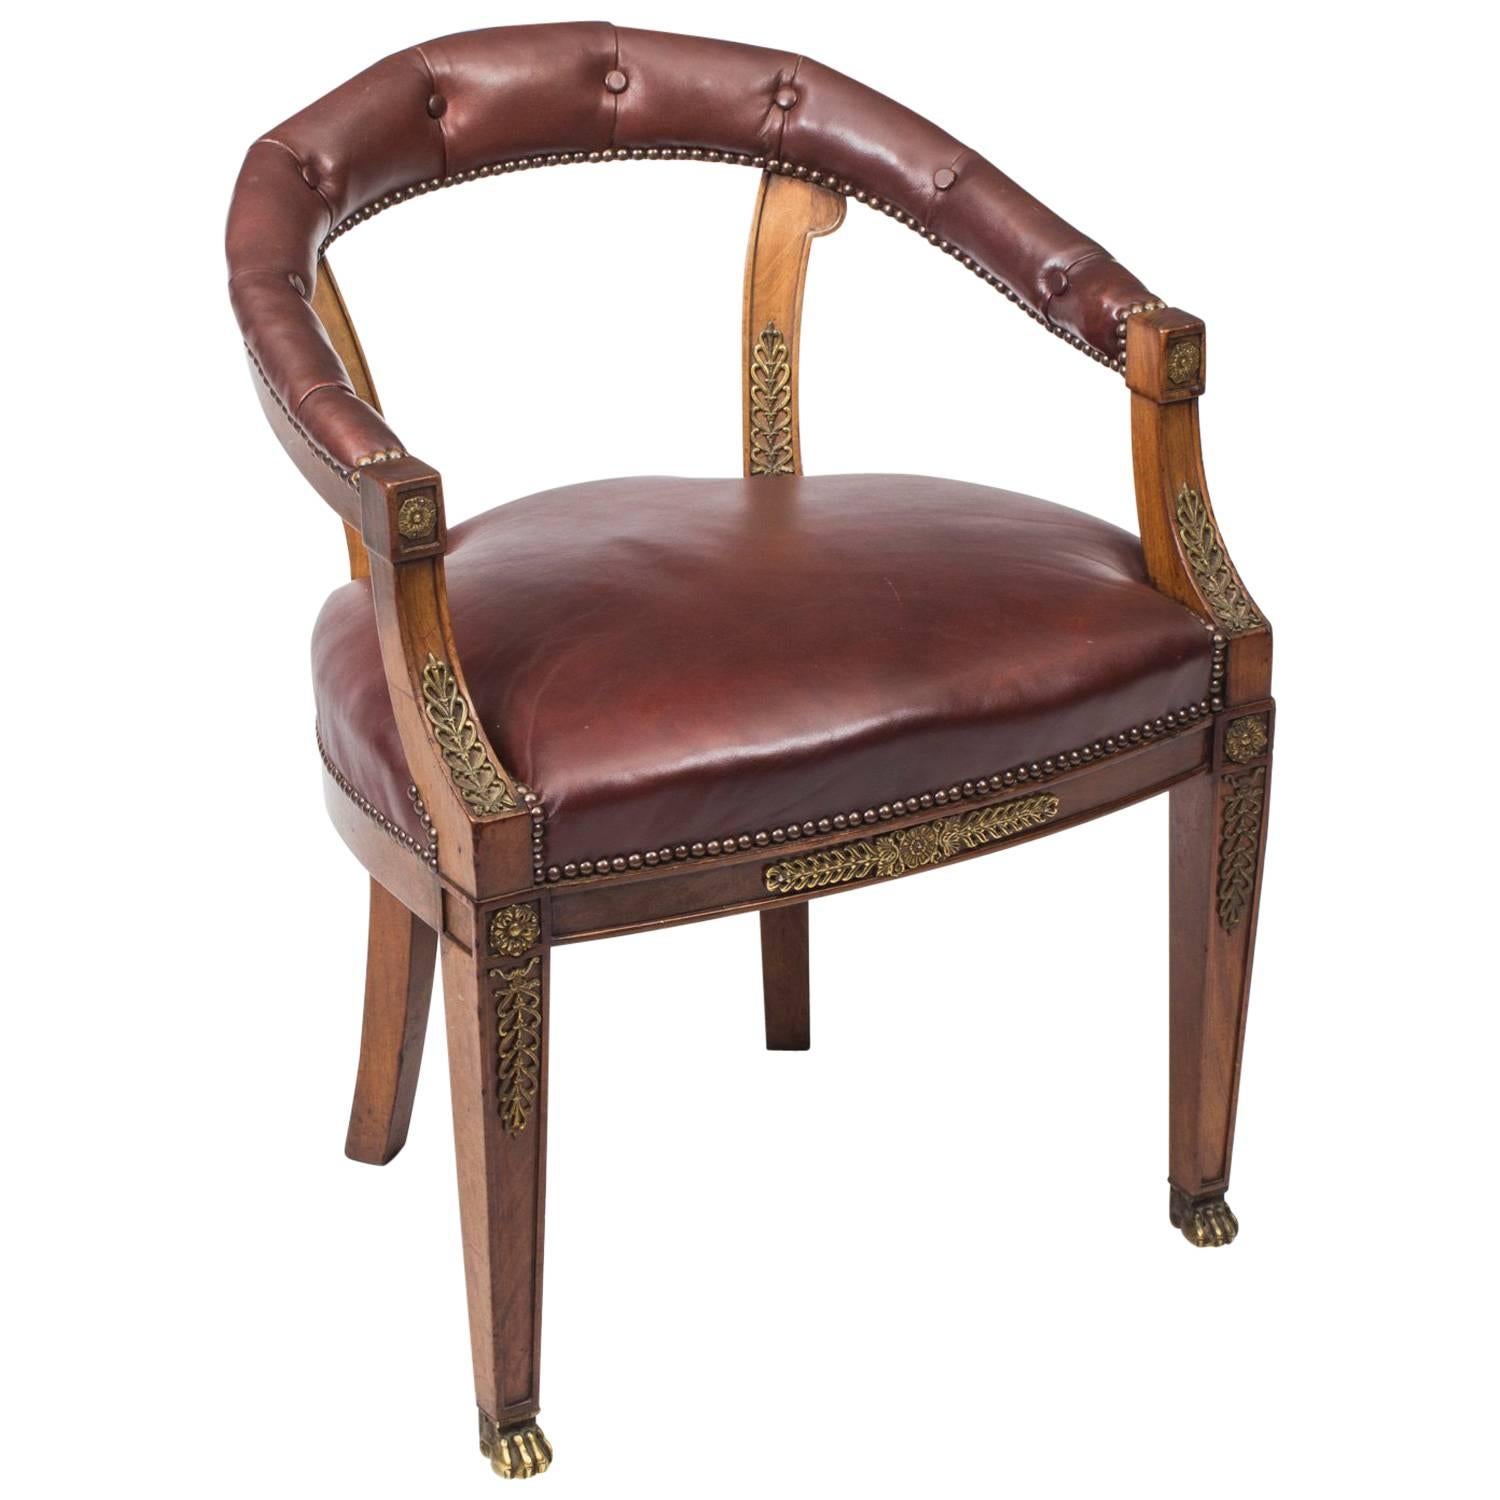 19th Century Second Empire Mahogany Tub Arm Desk Chair